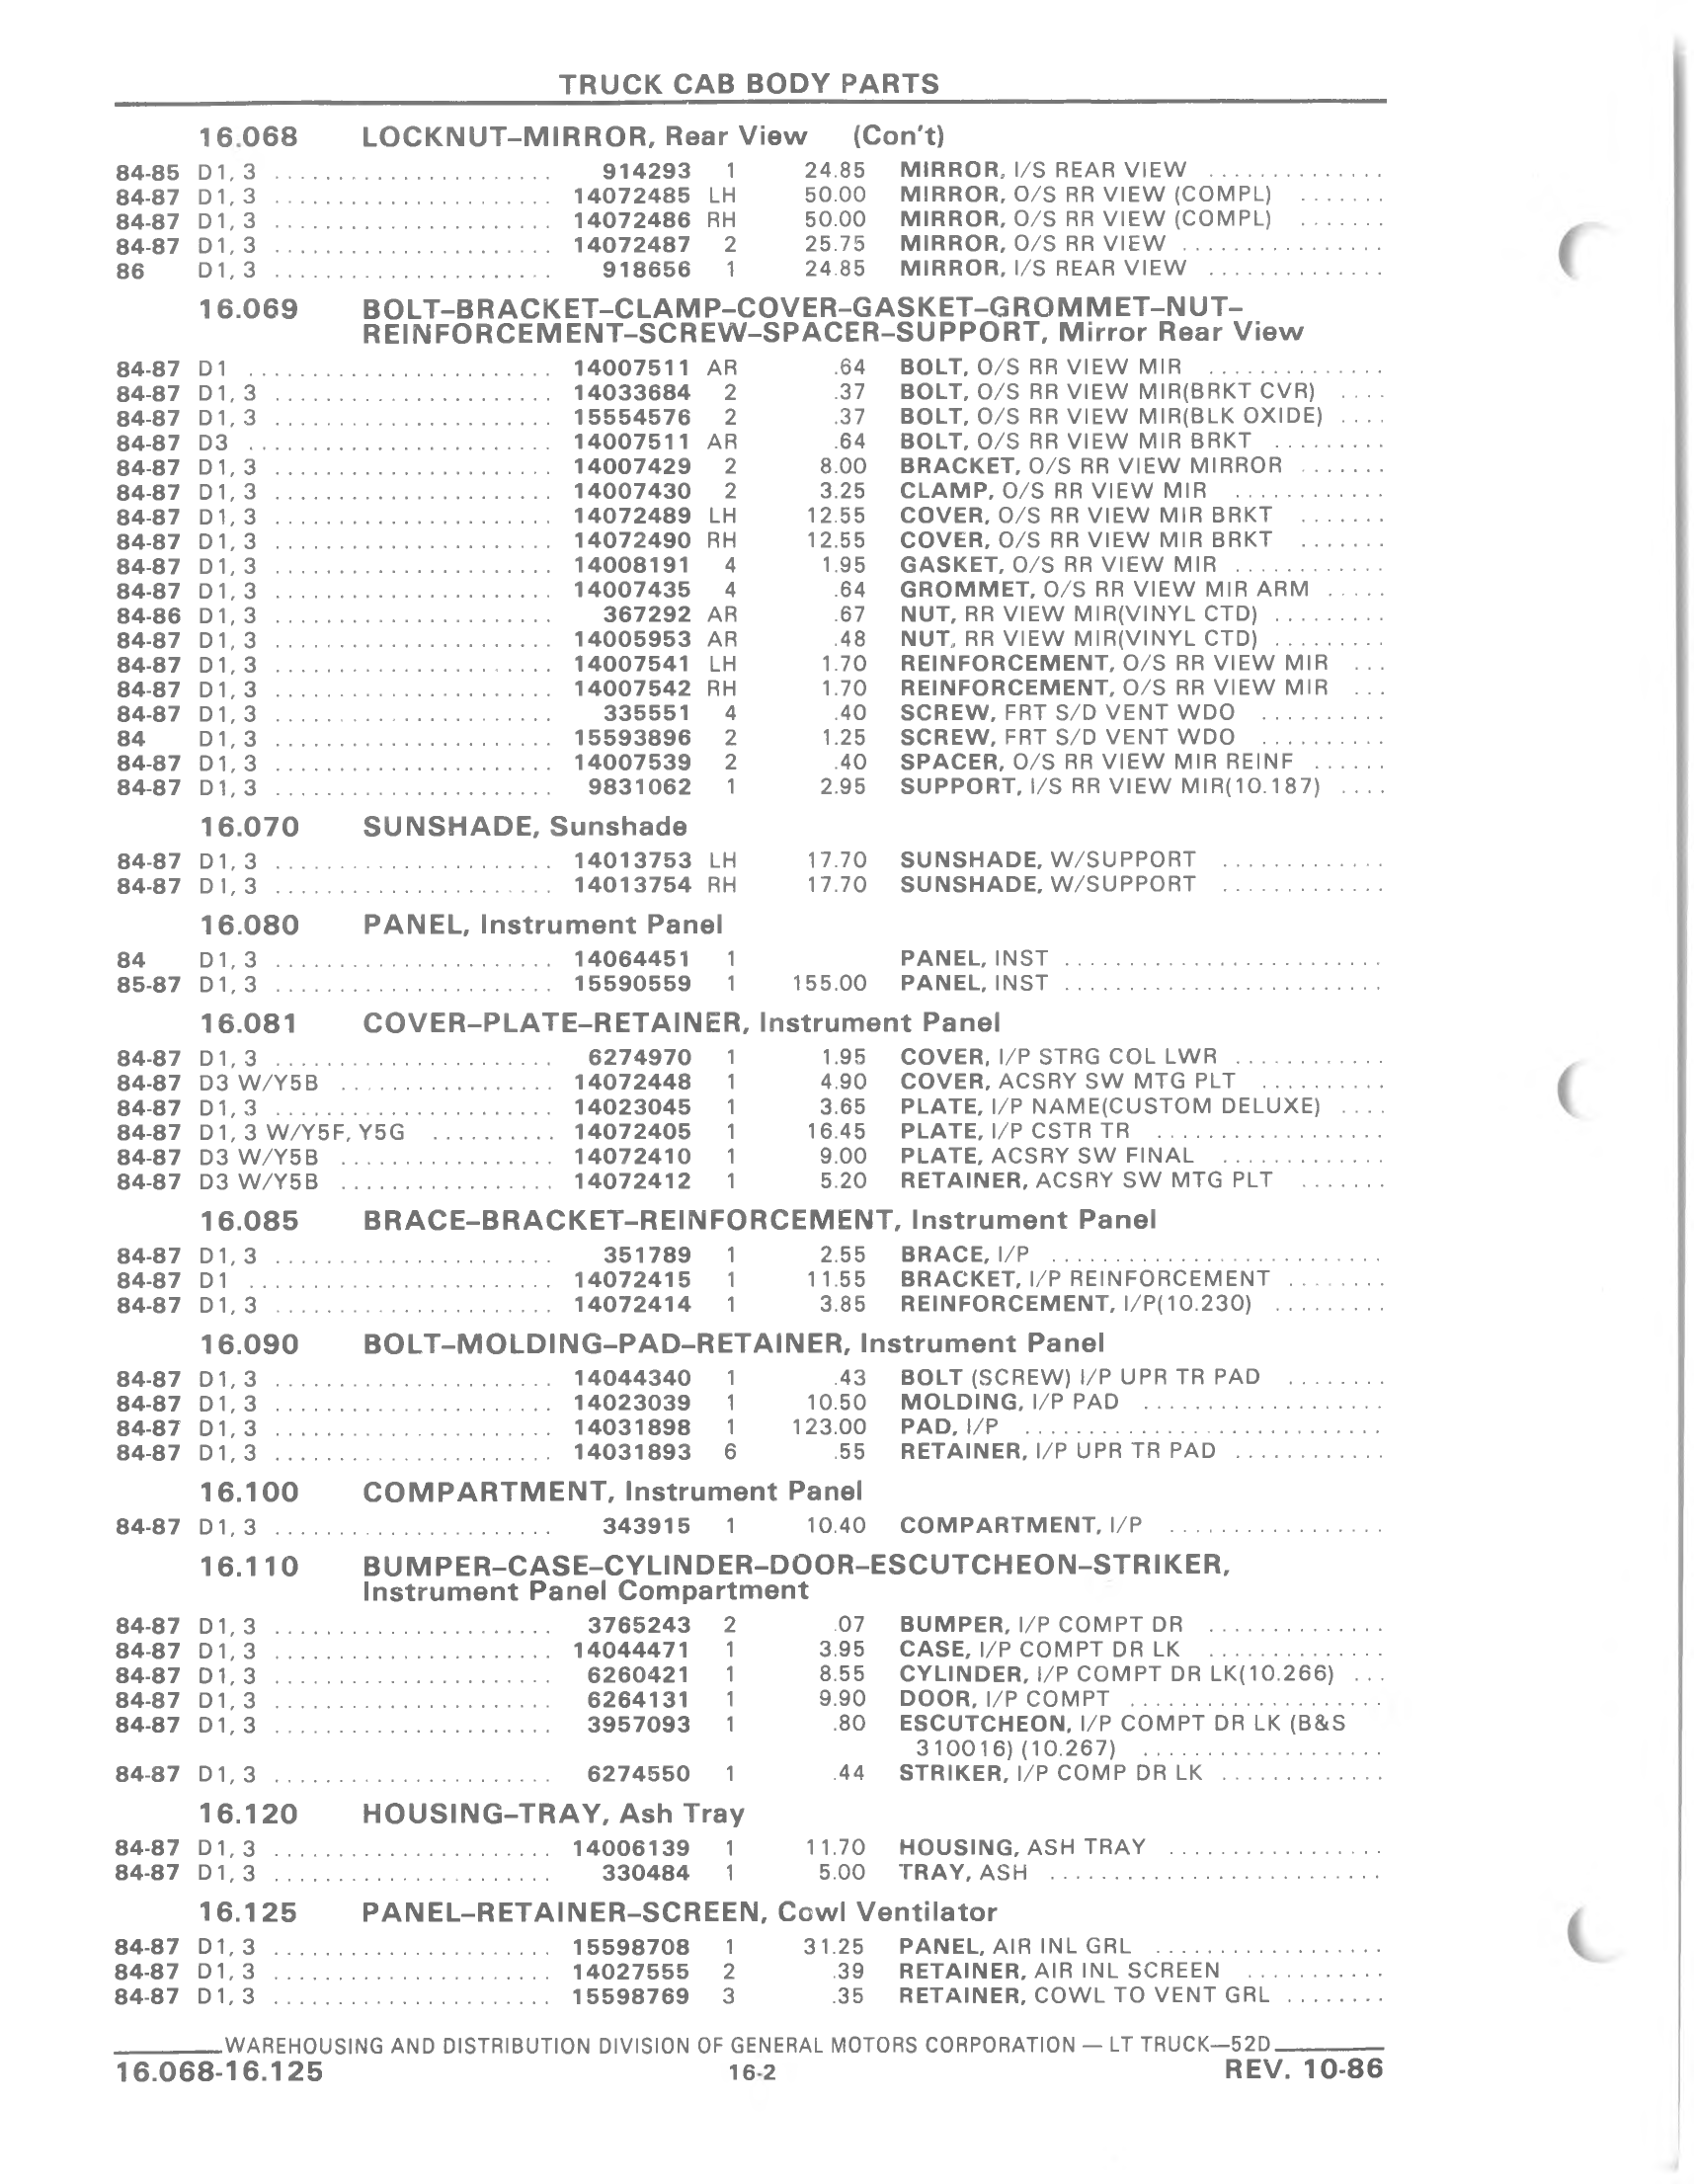 Parts and Accessories Catalog 52D October 1986